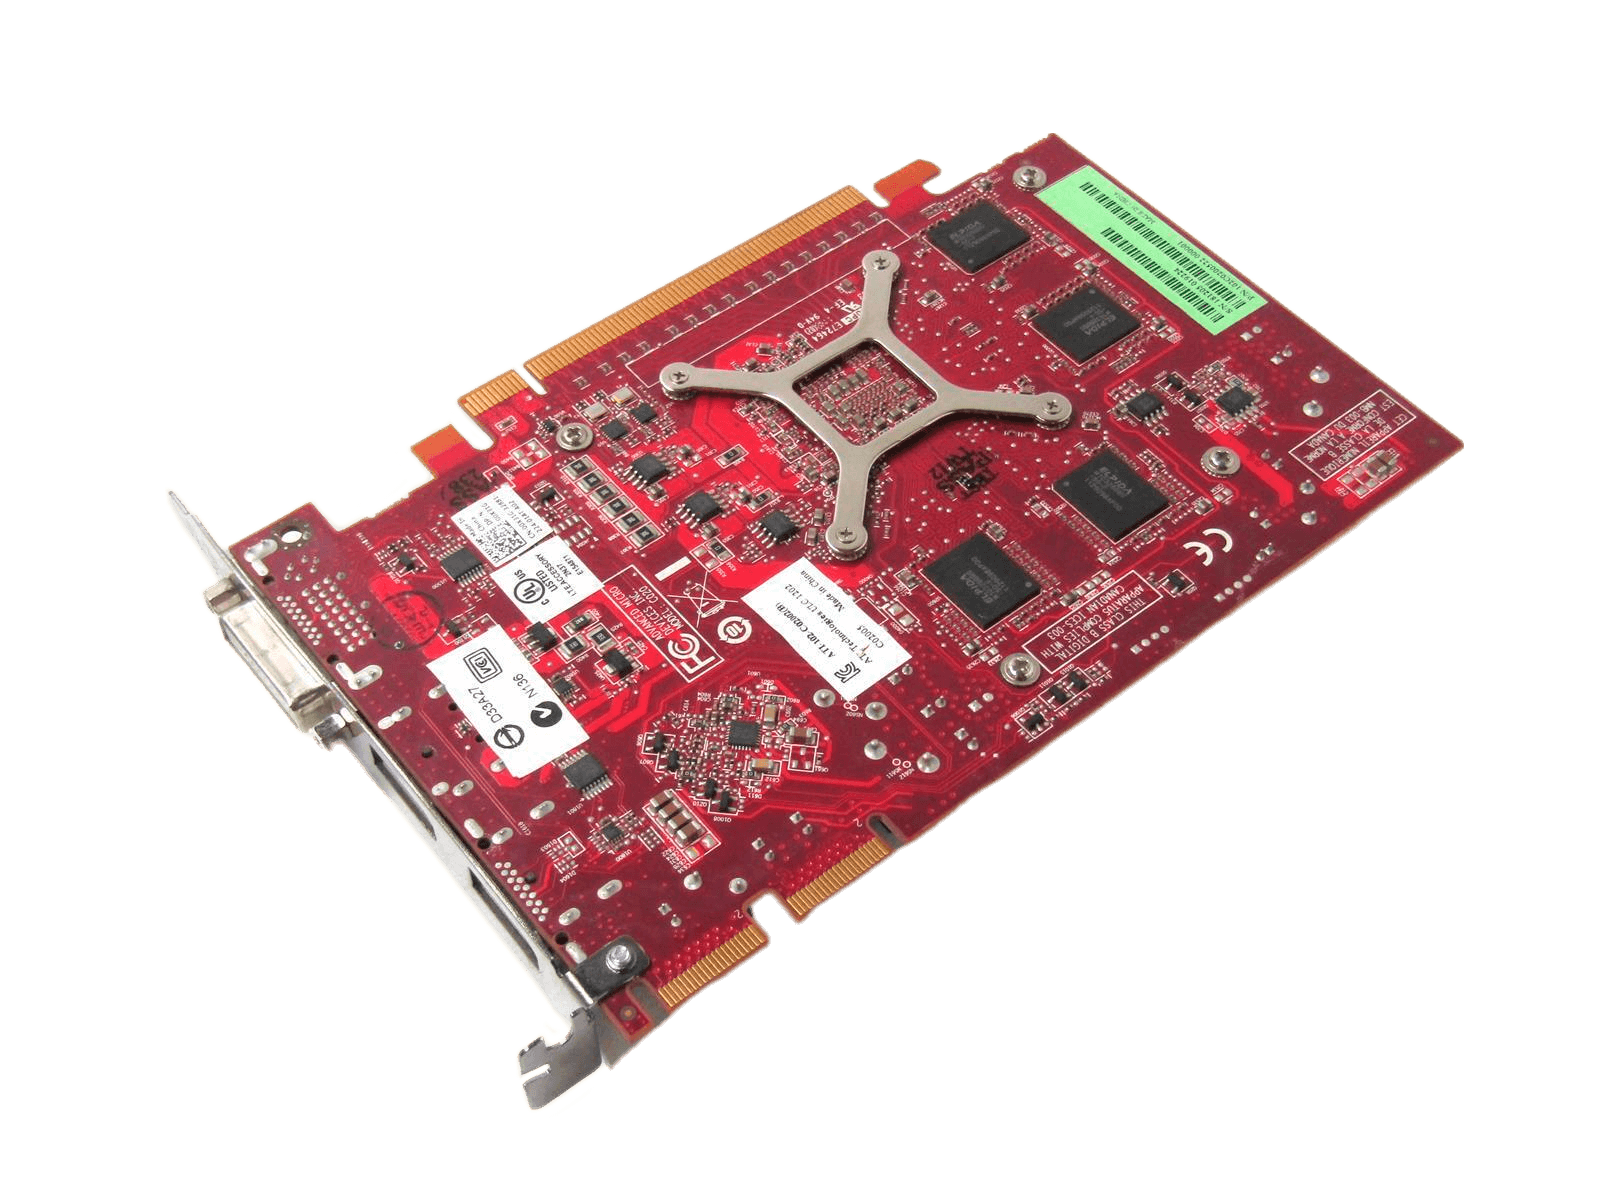 AMD ATI FirePro V4800 1GB DVI/2DisplayPort PCI-Express Workstation Graphics Card